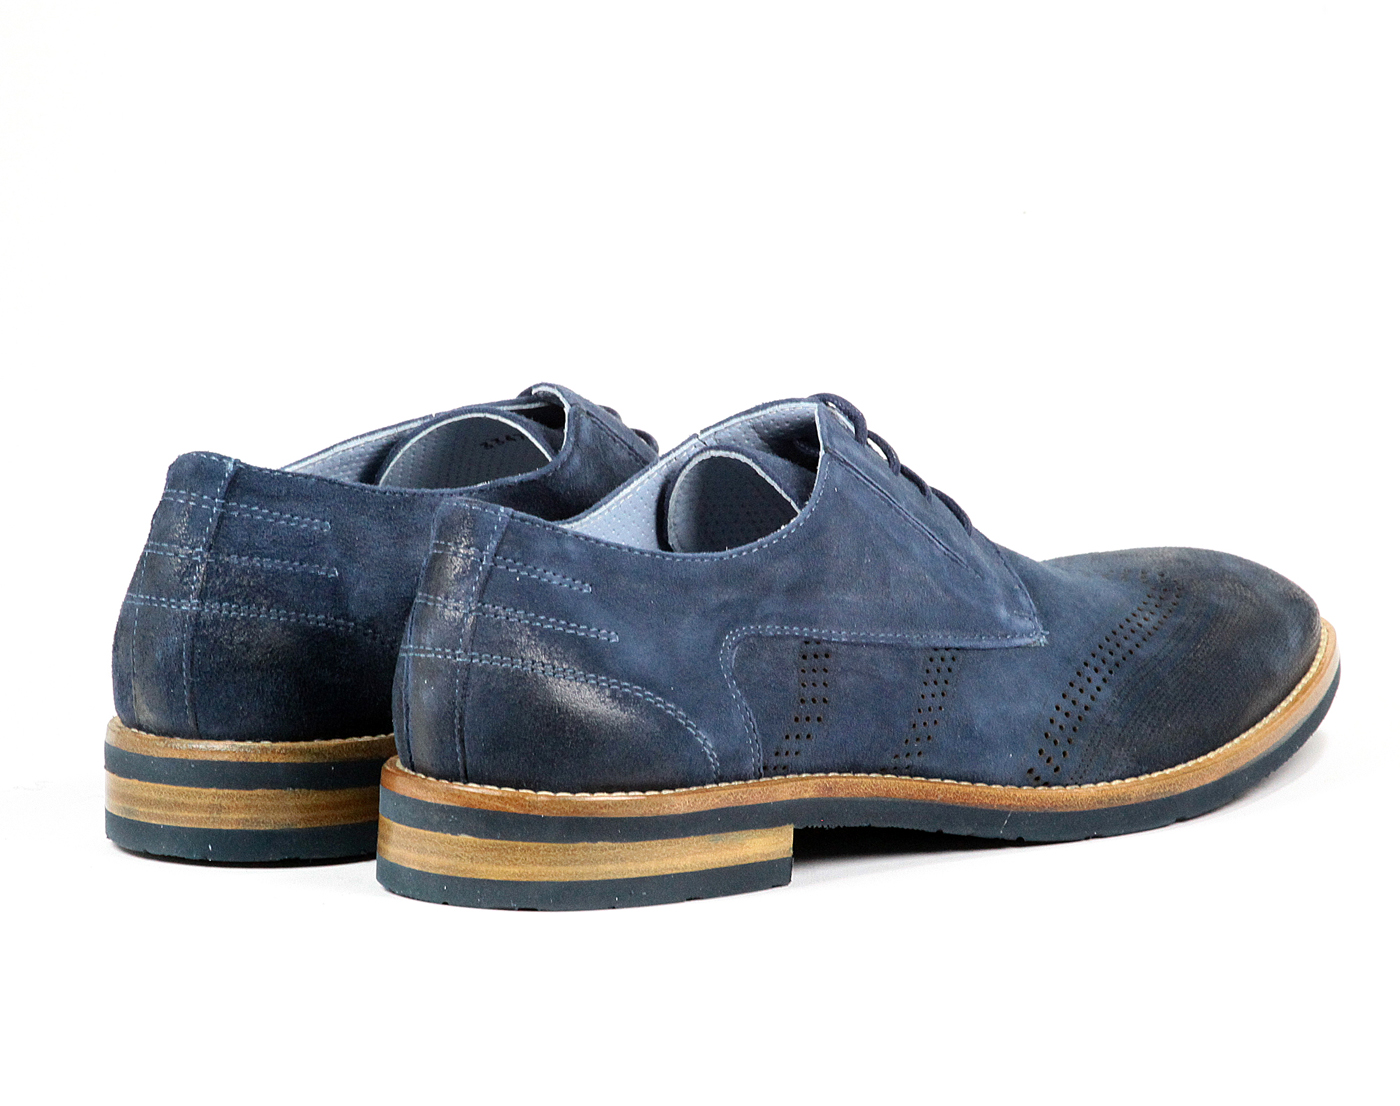 Blue Suede Shoes PNG - 58283